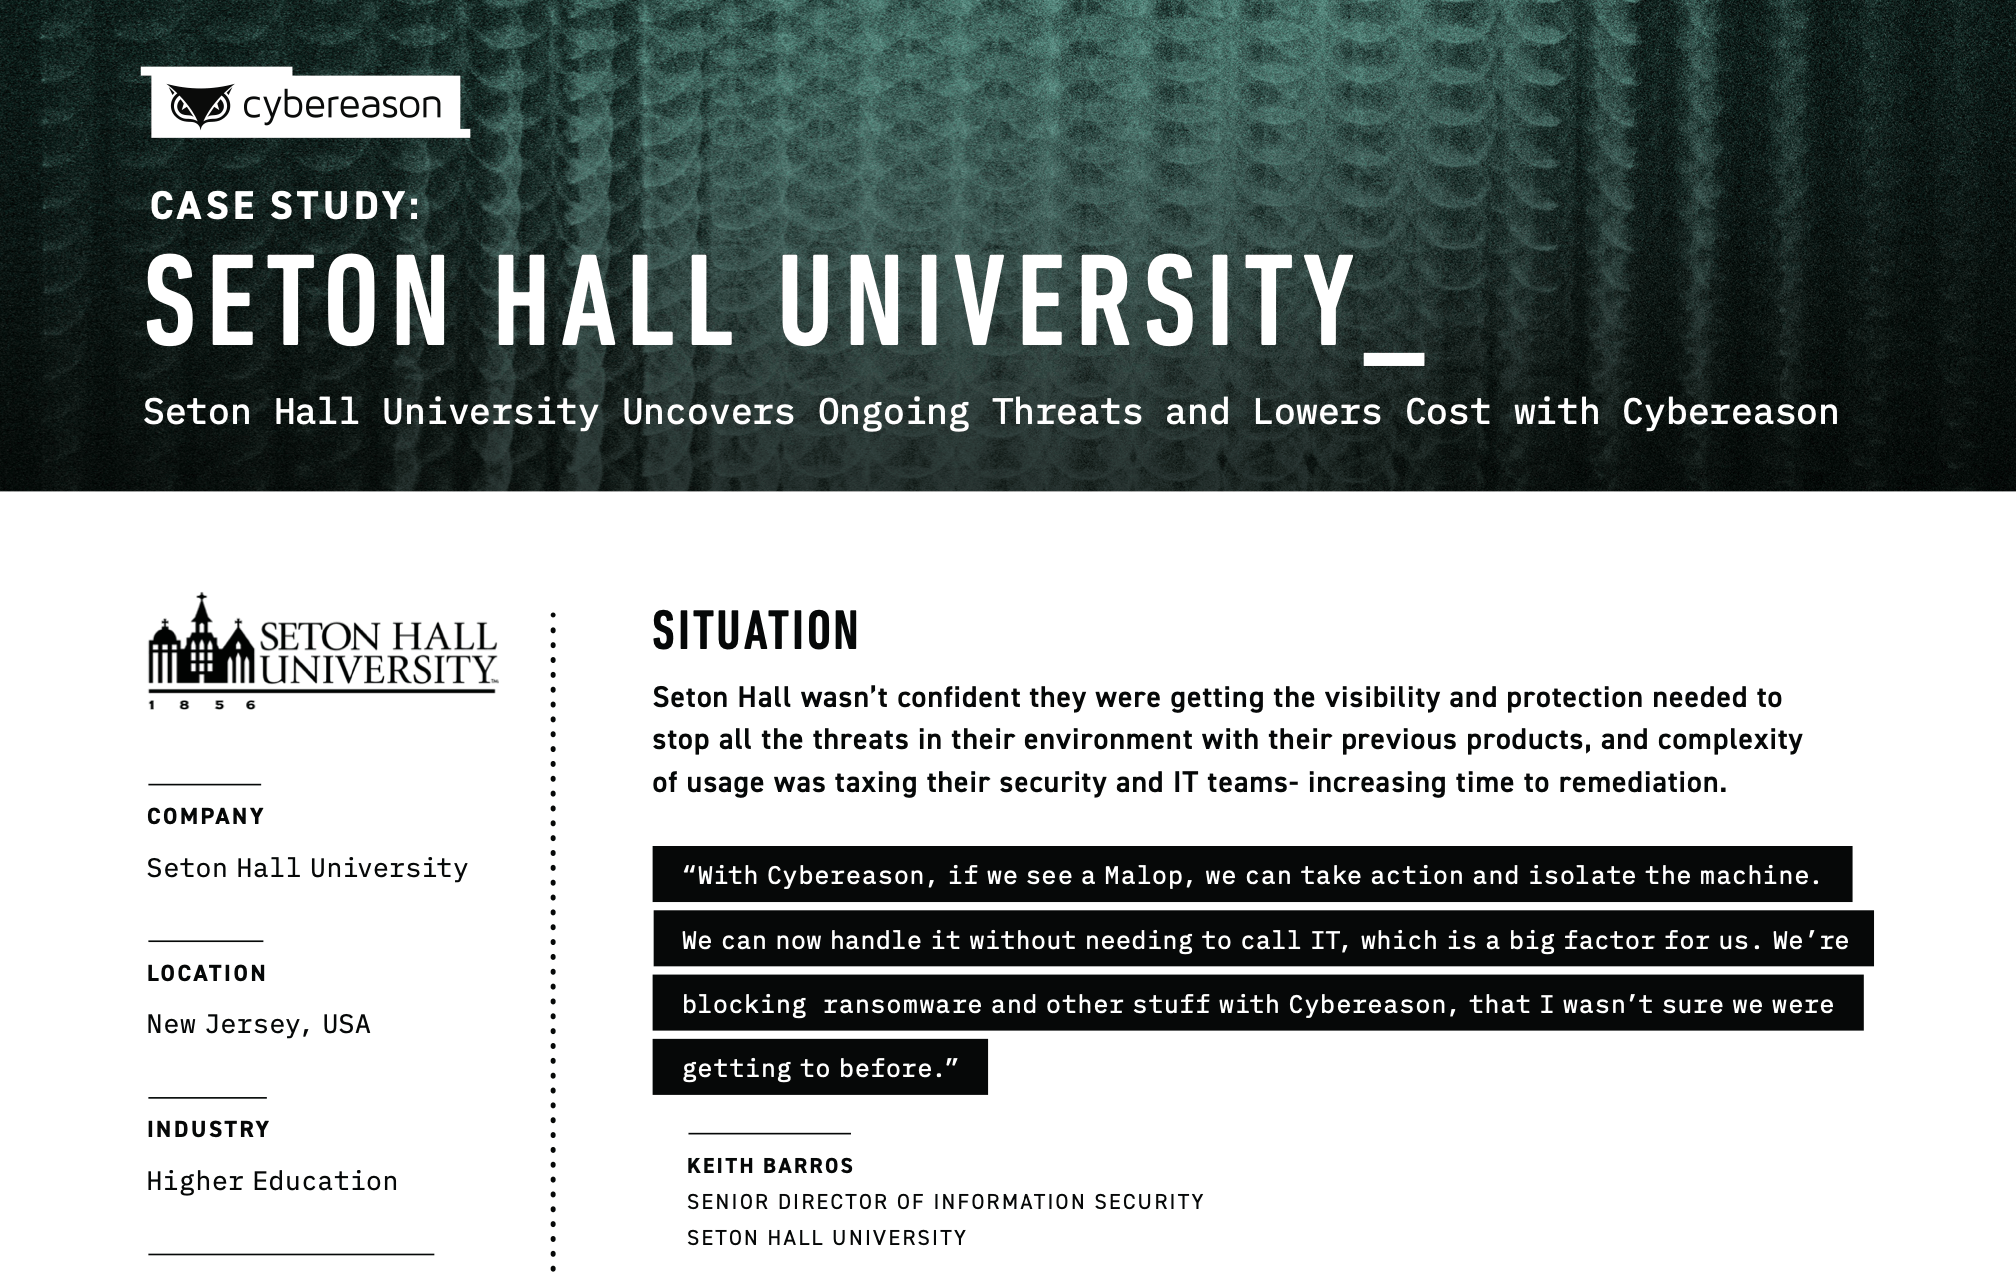 cybereason seton hall university case study screenshot